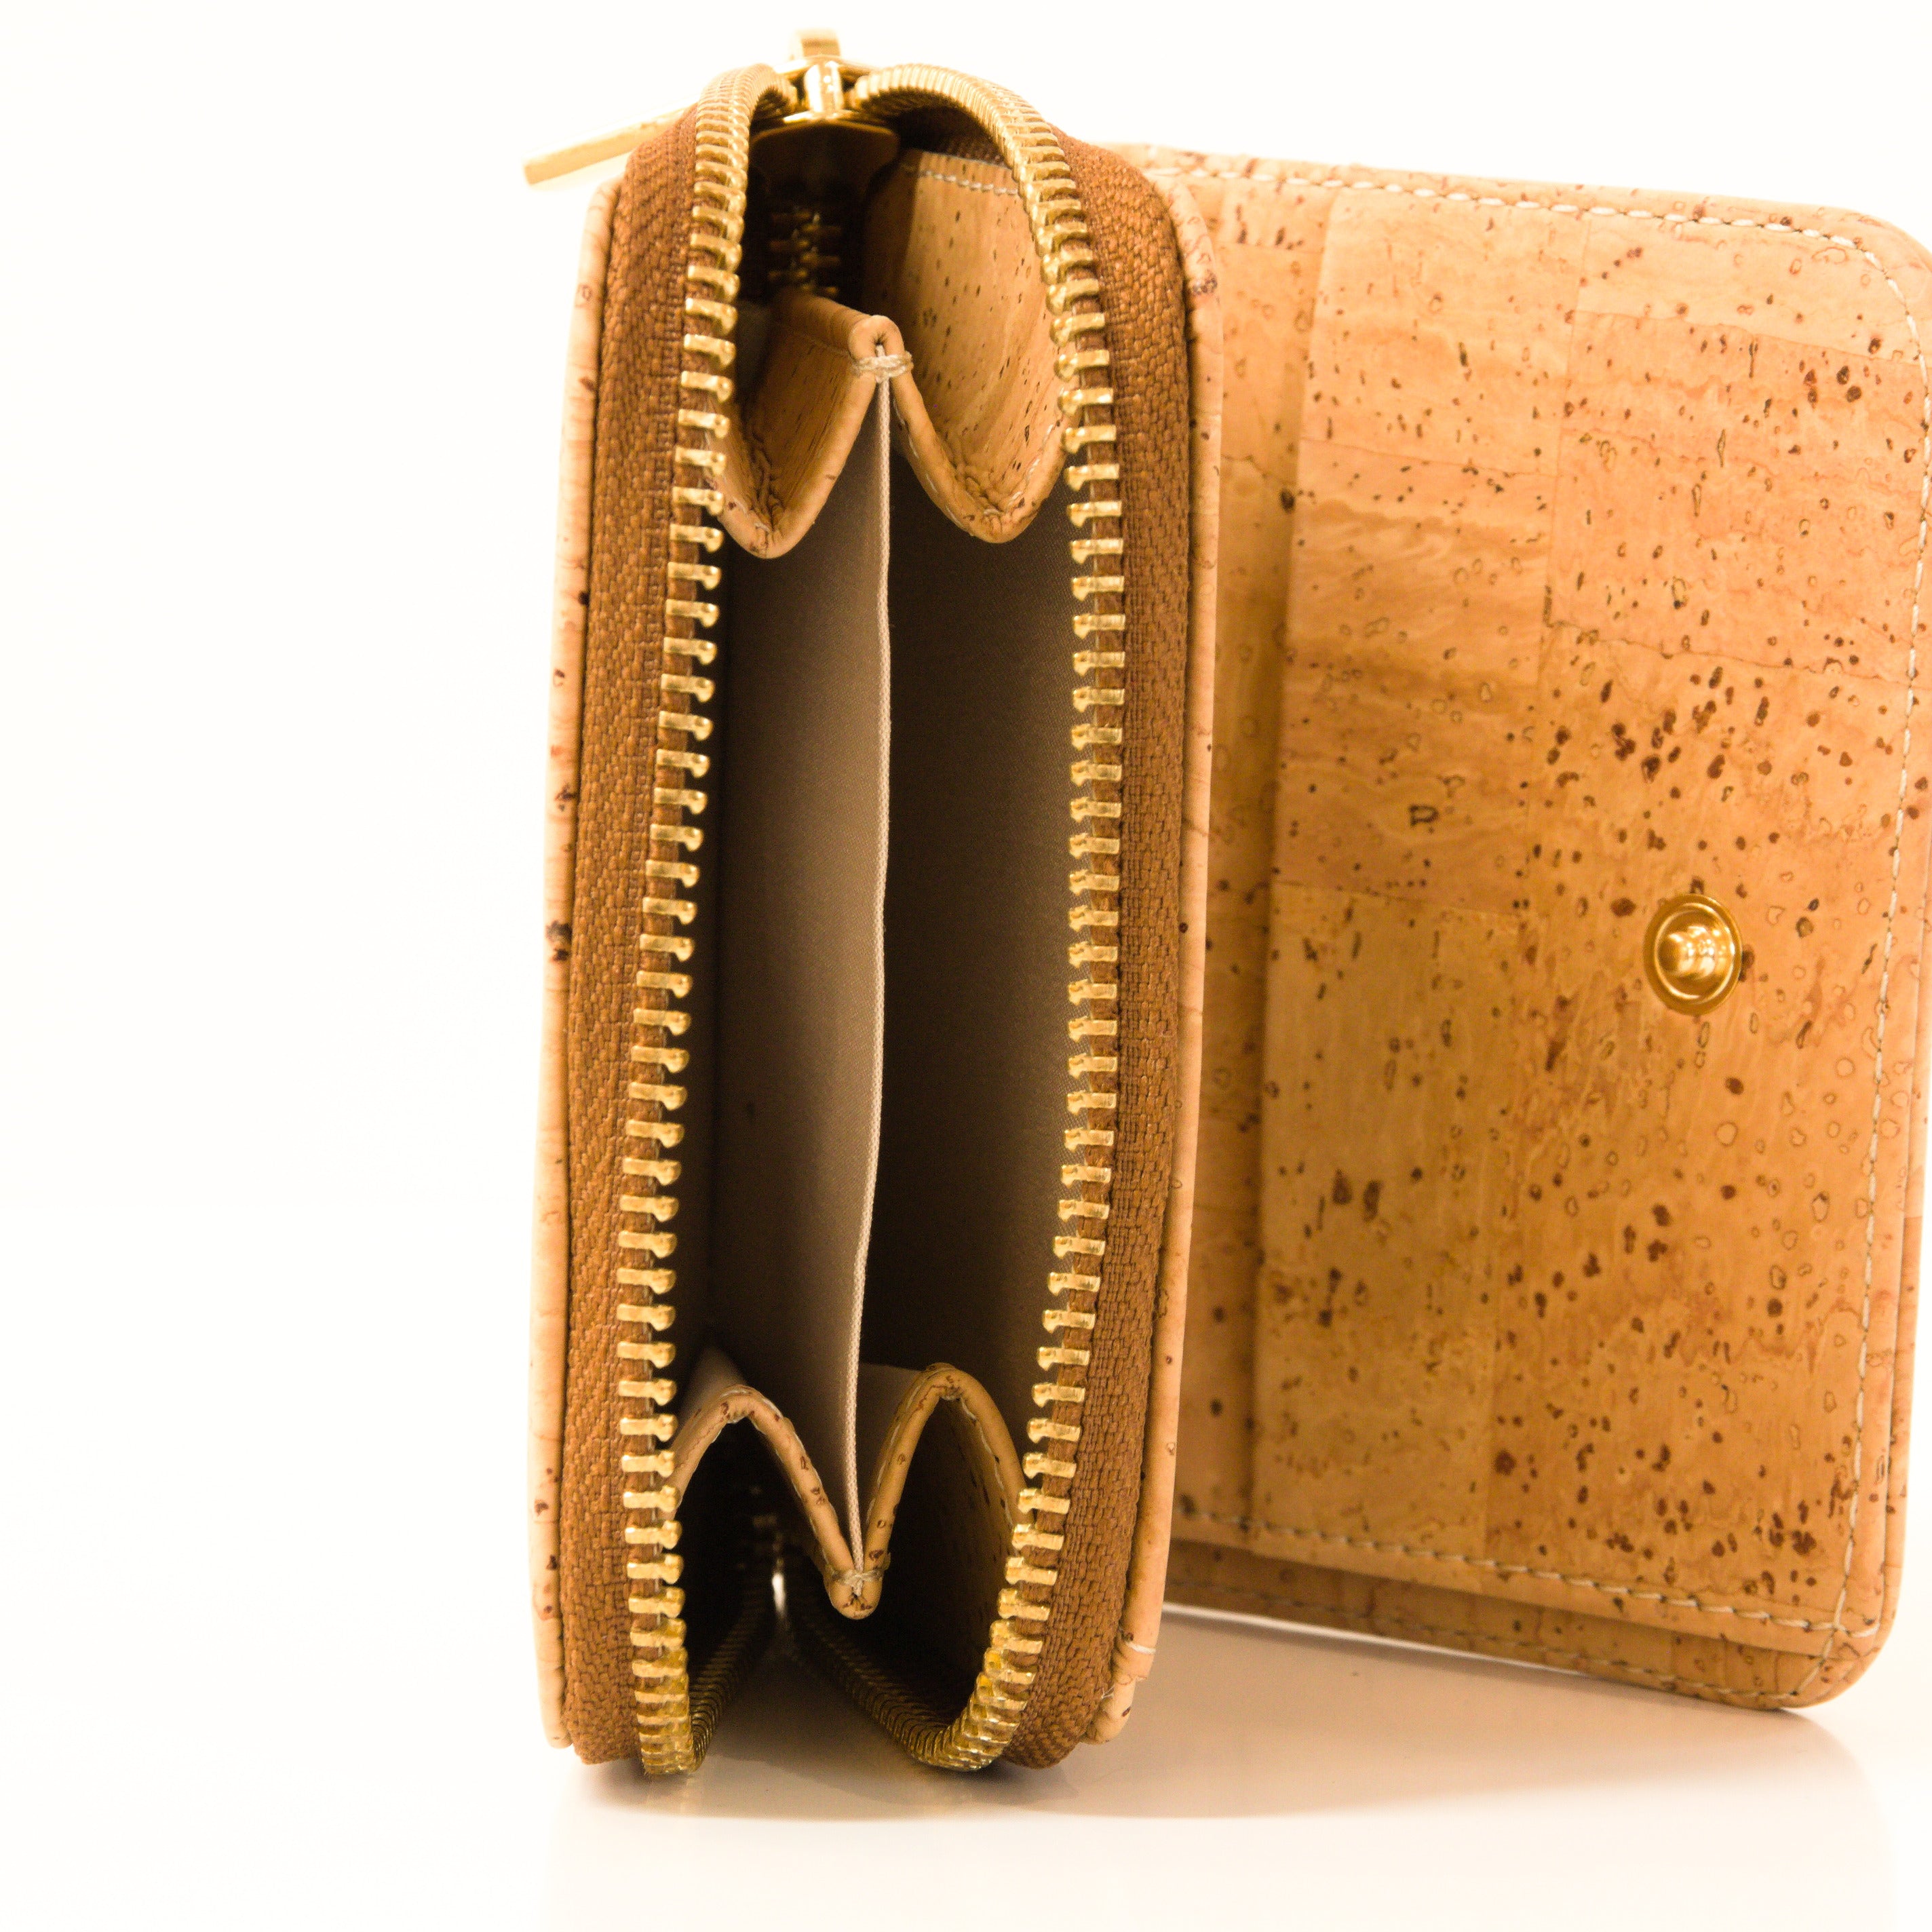 Portafoglio da donna in sughero * vari design * portafoglio da donna * fatto a mano in Portogallo * marca Artipel